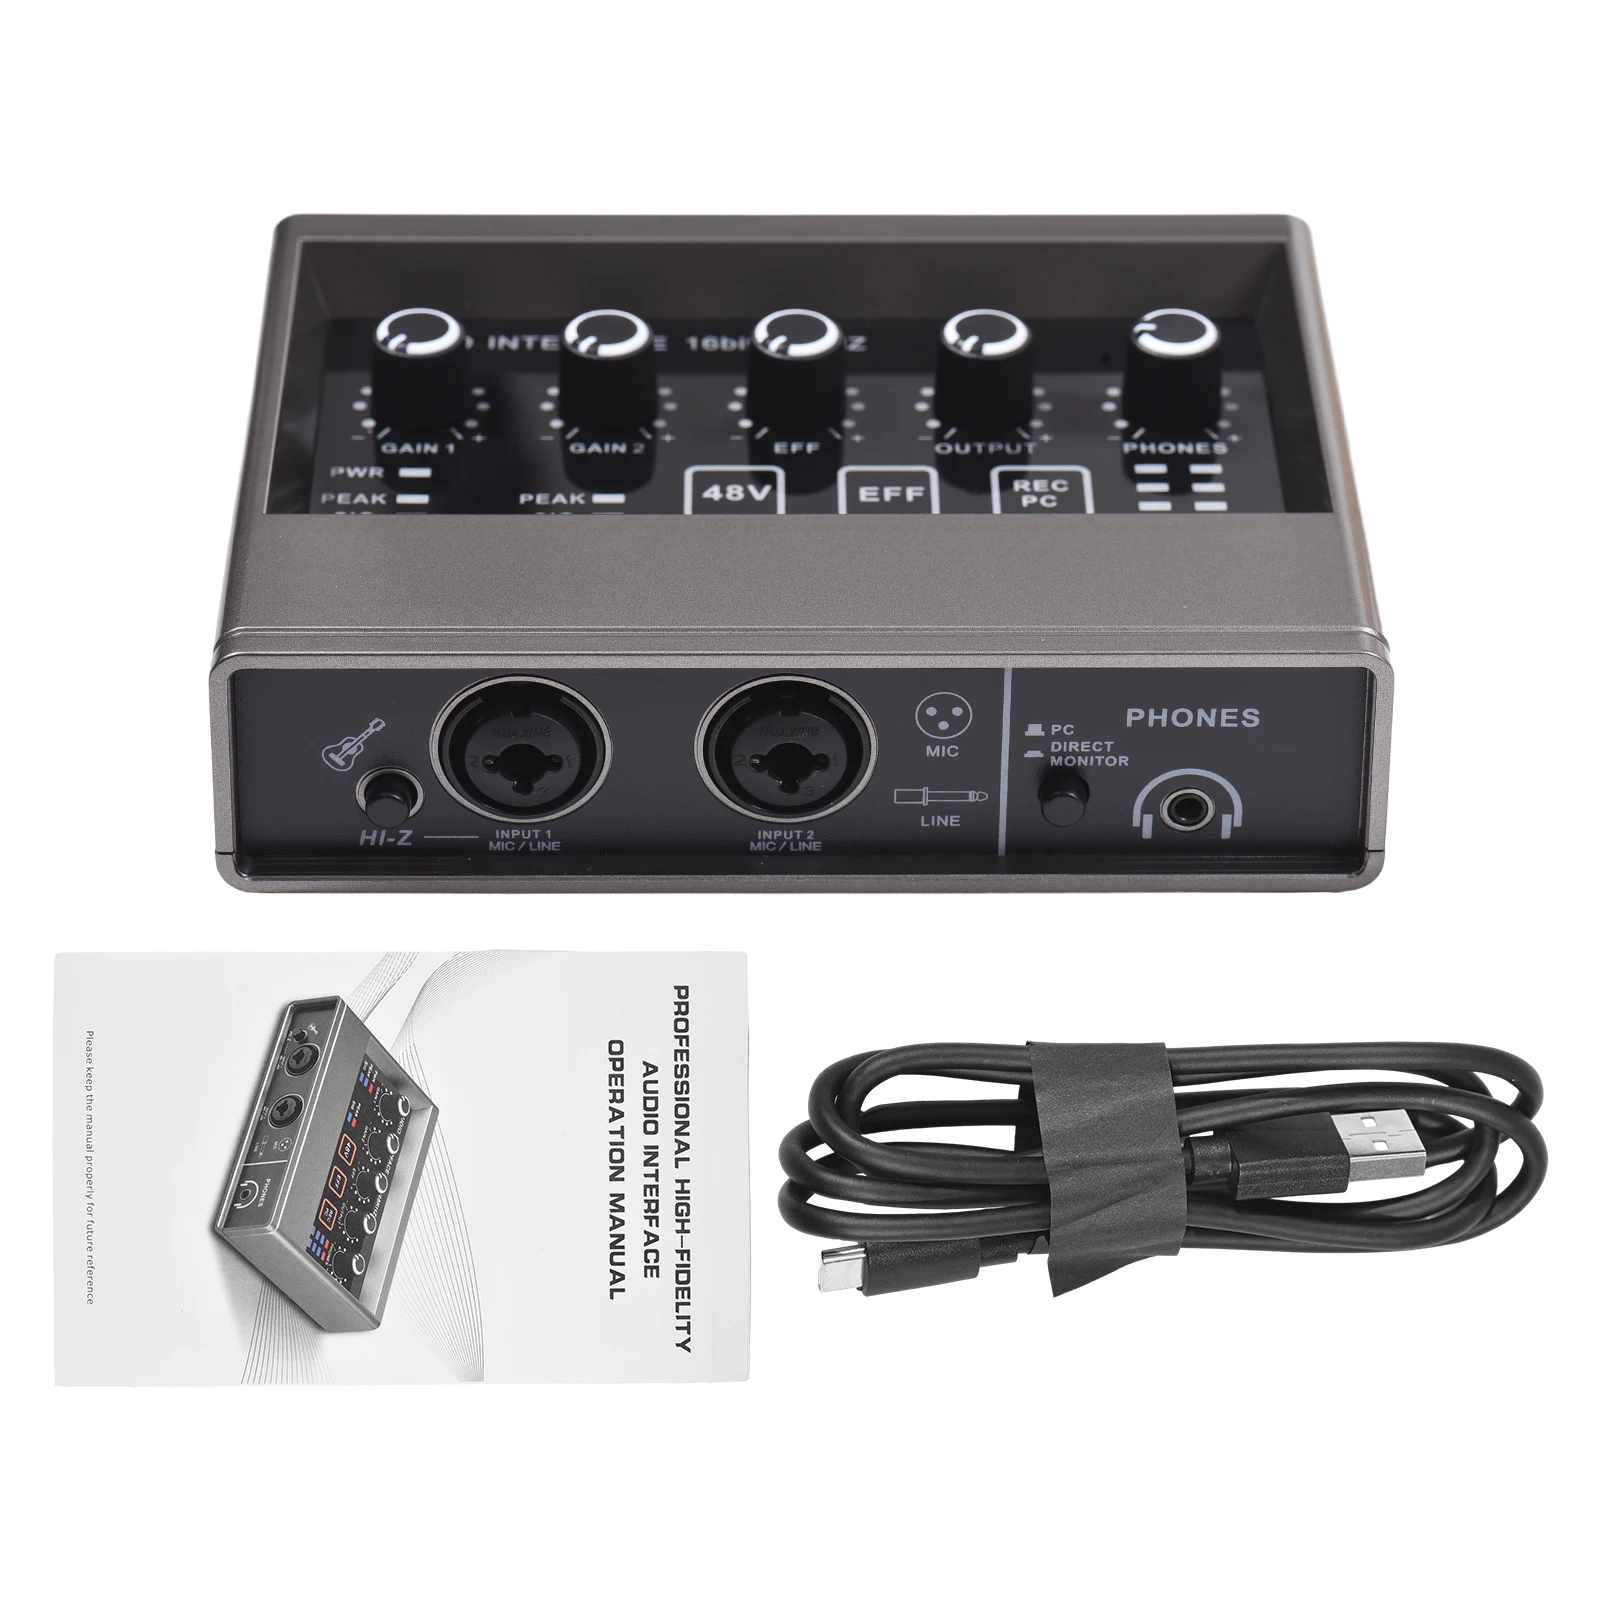 

Audio Interface Professional Recording XLR Audio Interface DSP Reverb 48V Phantom Power Sound Card 16bit/48kHz Resolution